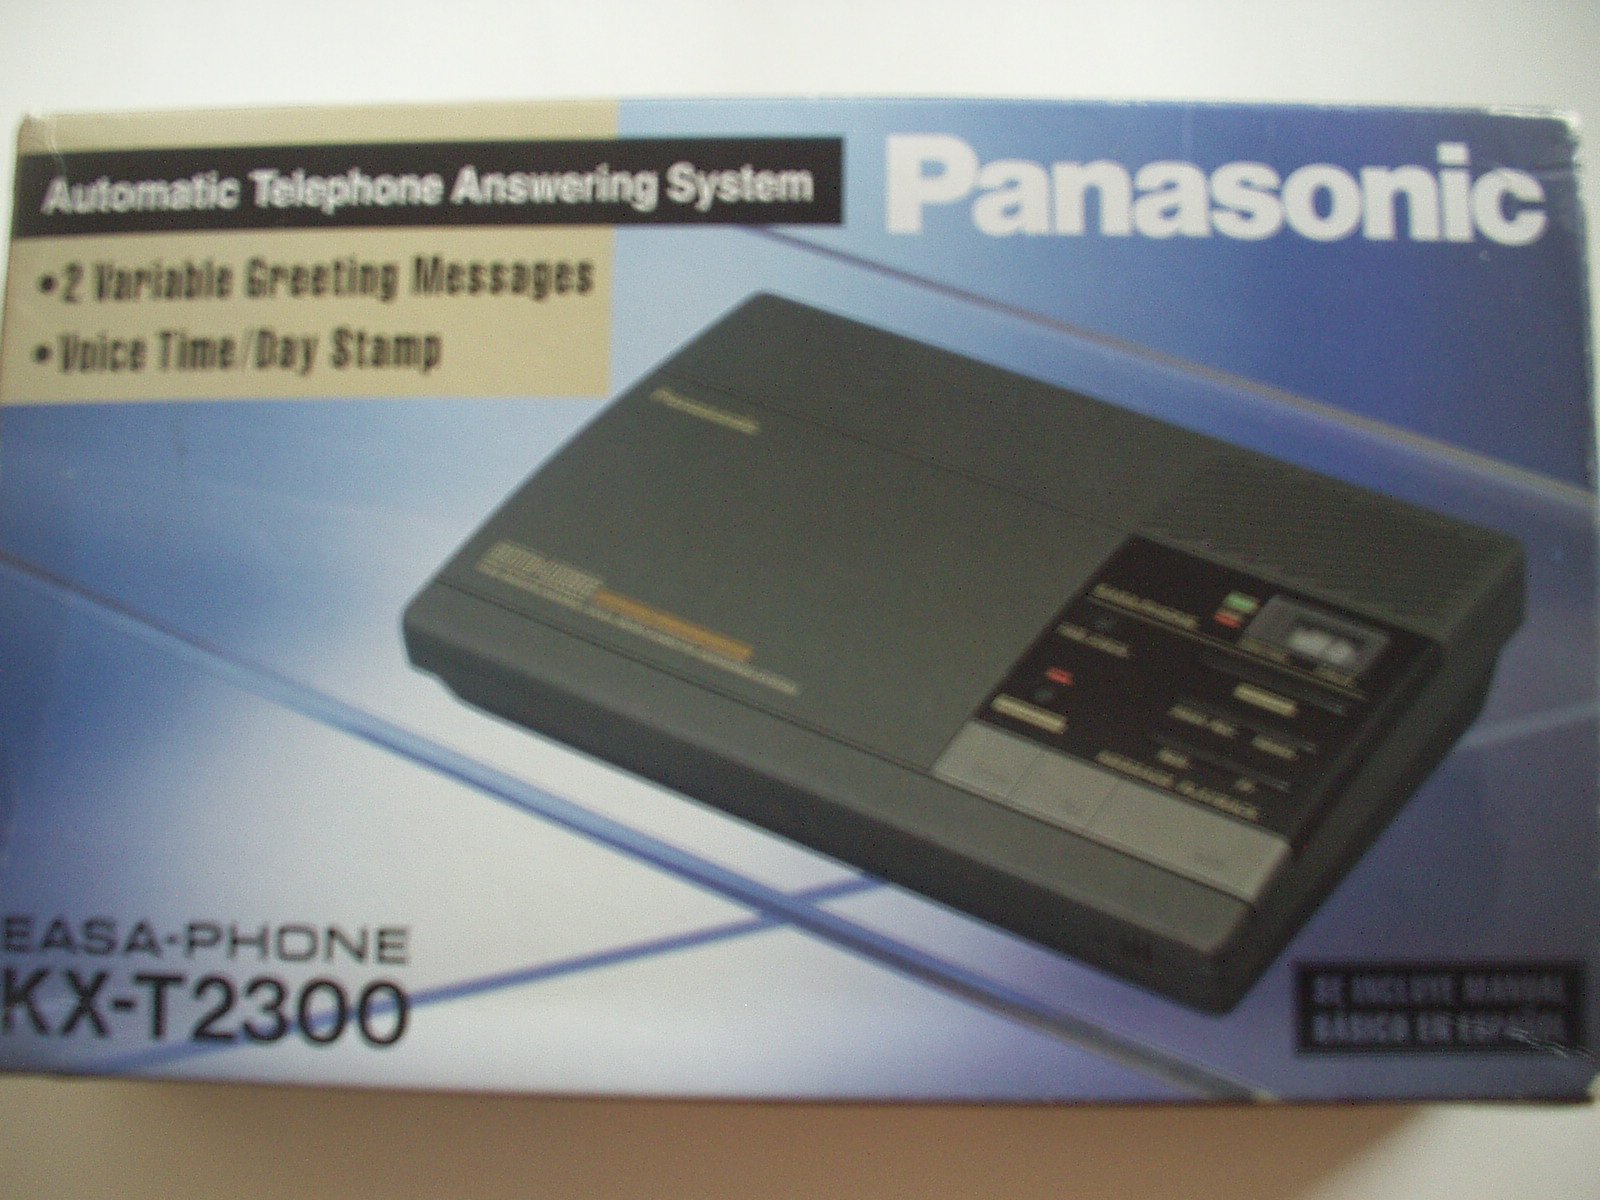 Panasonic KX-T2300 Automatic Telephone Answering System